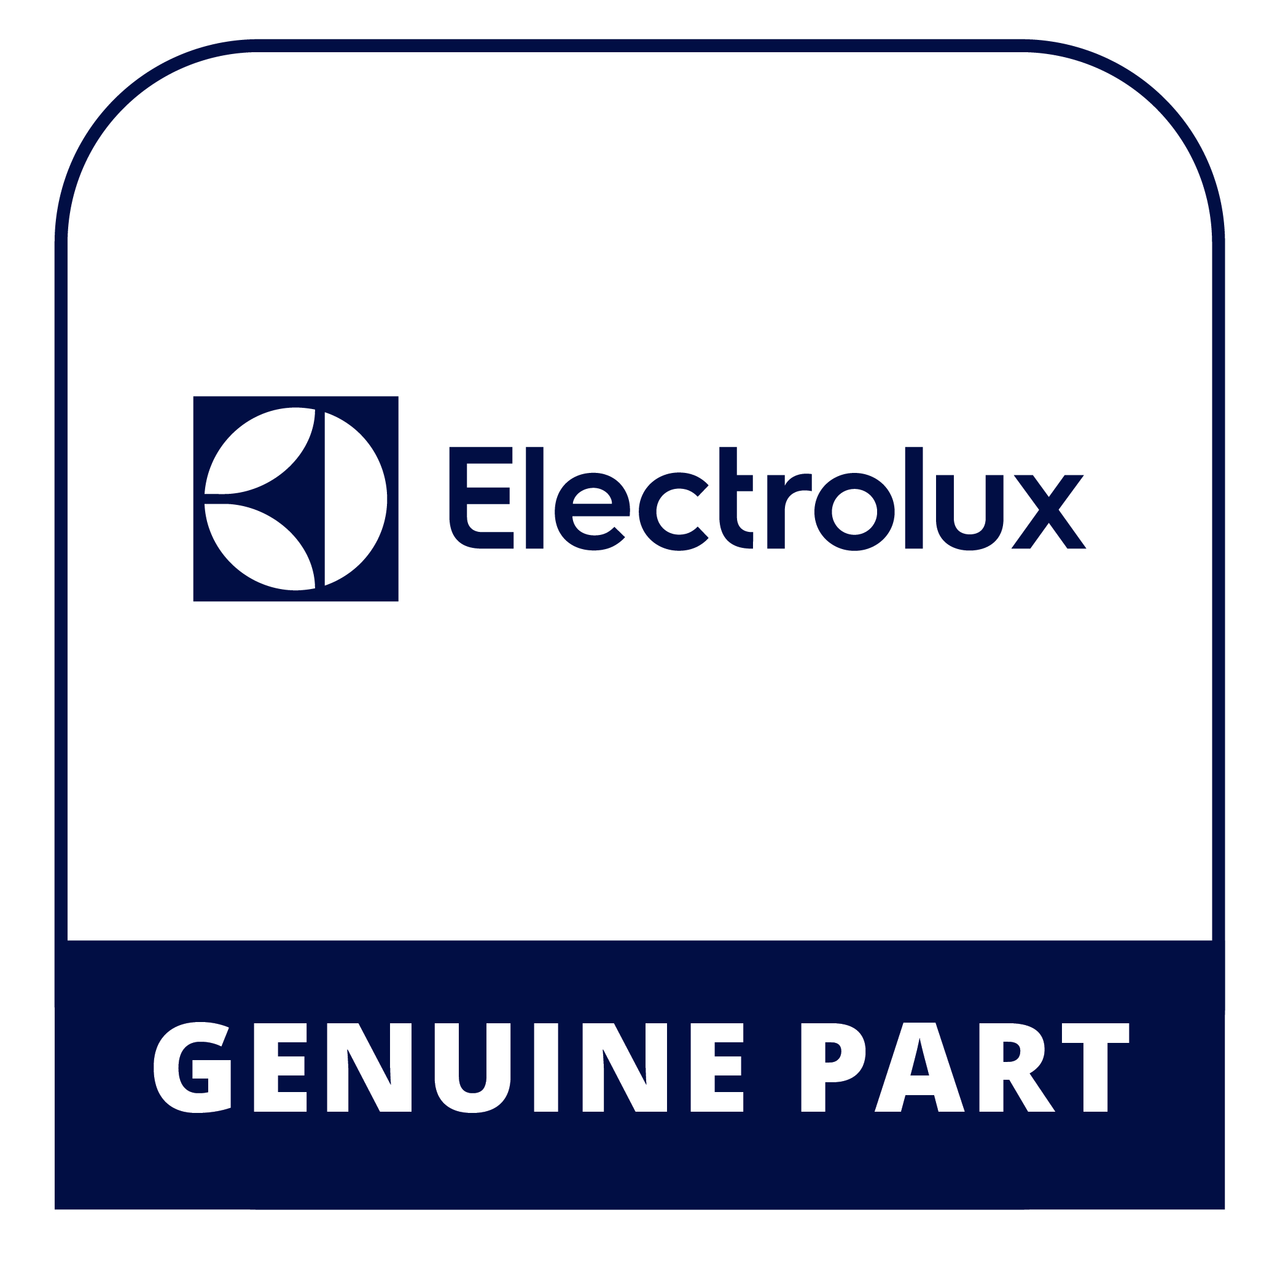 Frigidaire - Electrolux 5304464410 Kickplate - Genuine Electrolux Part